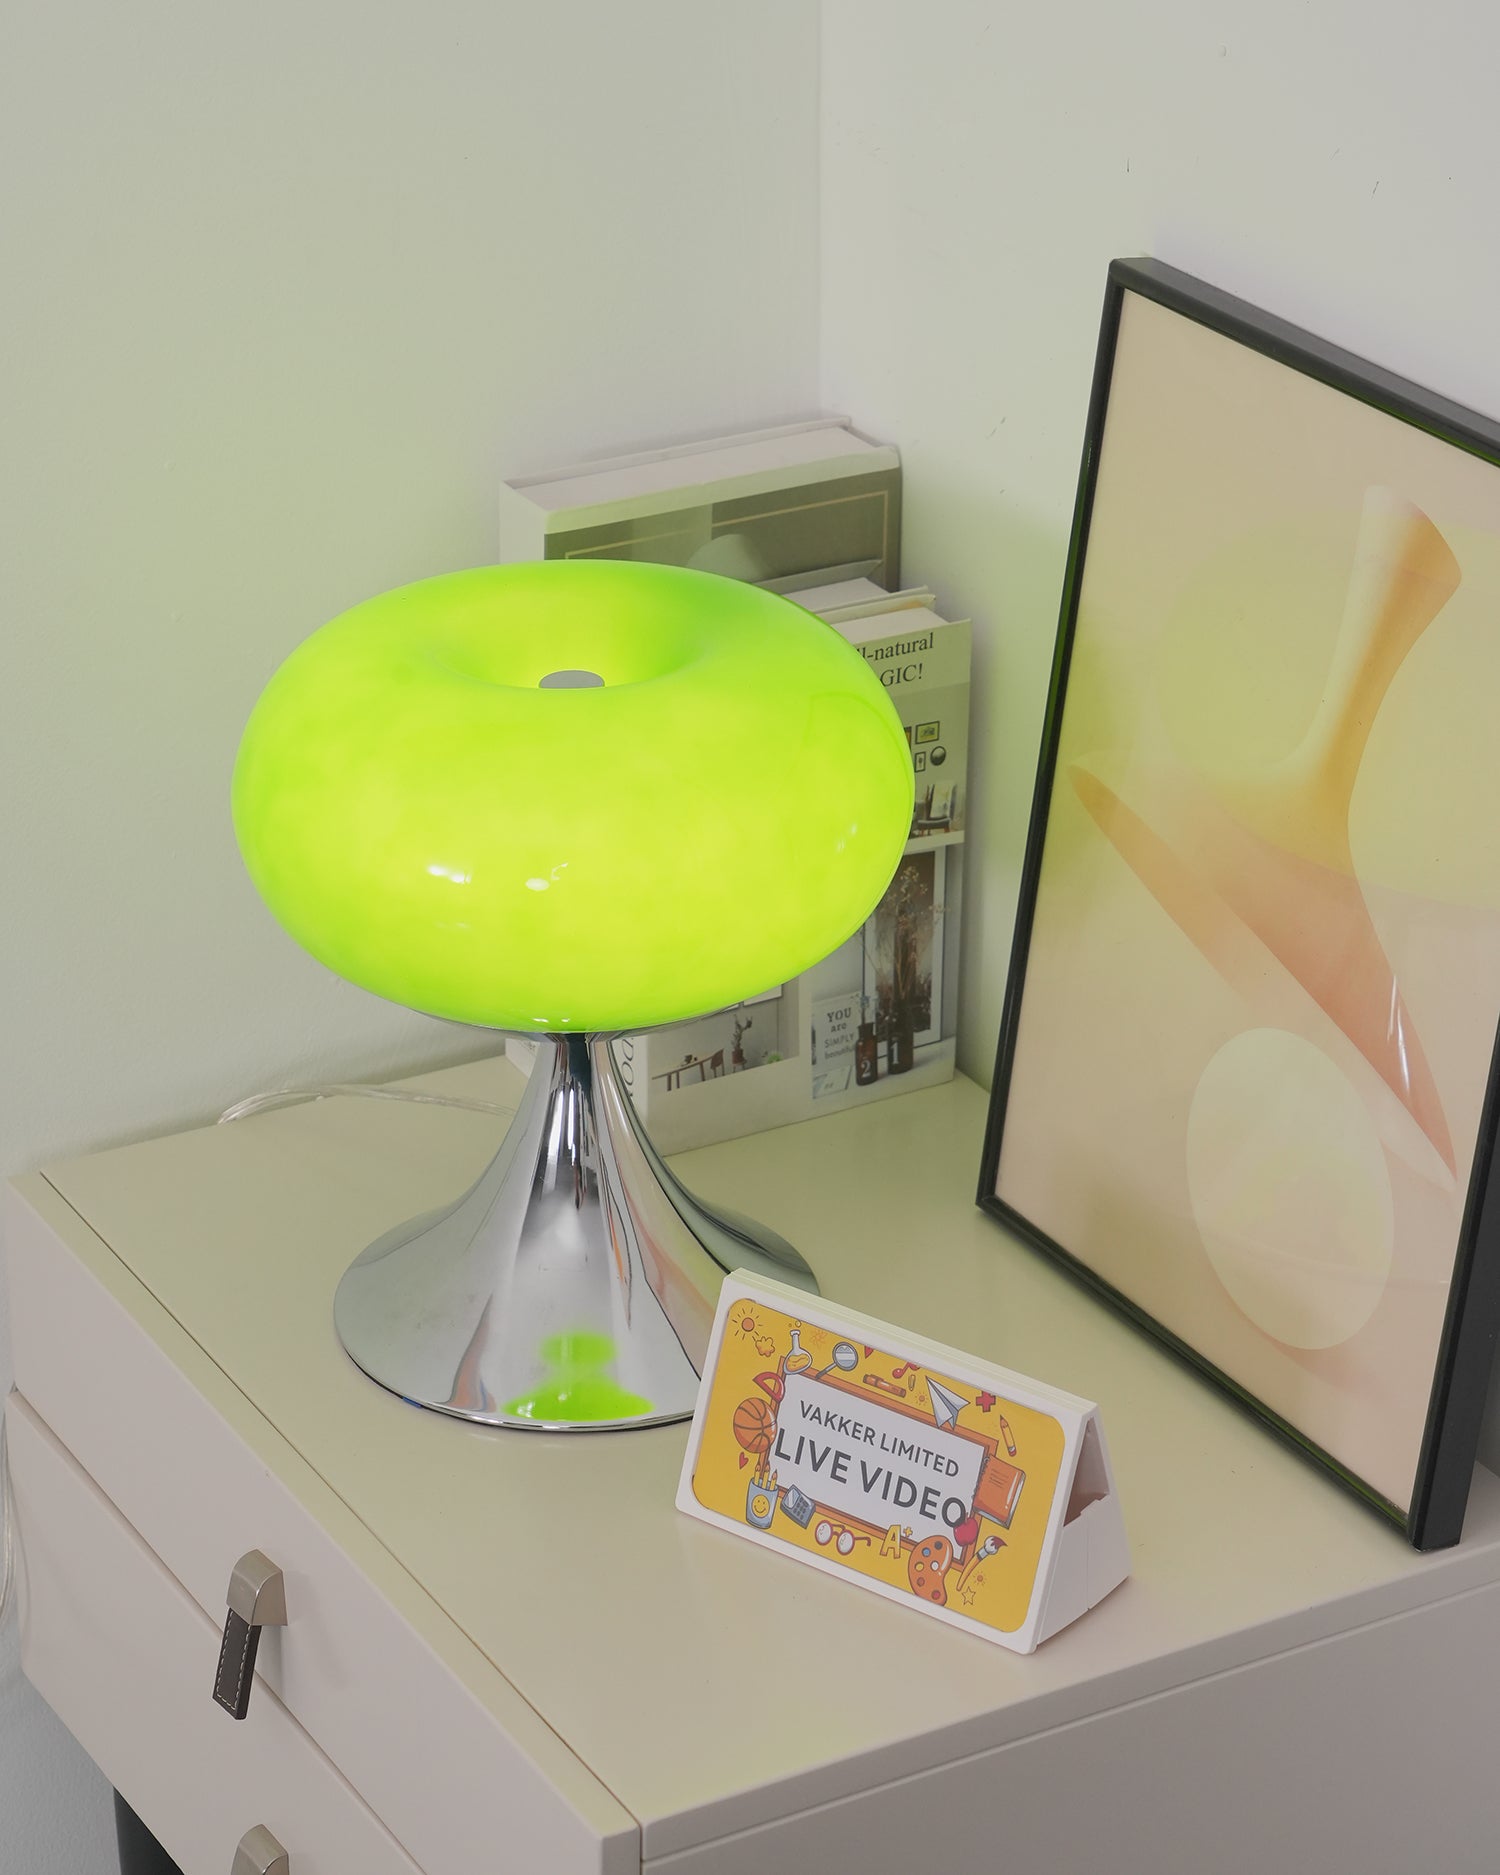 Lollipop Table Lamp